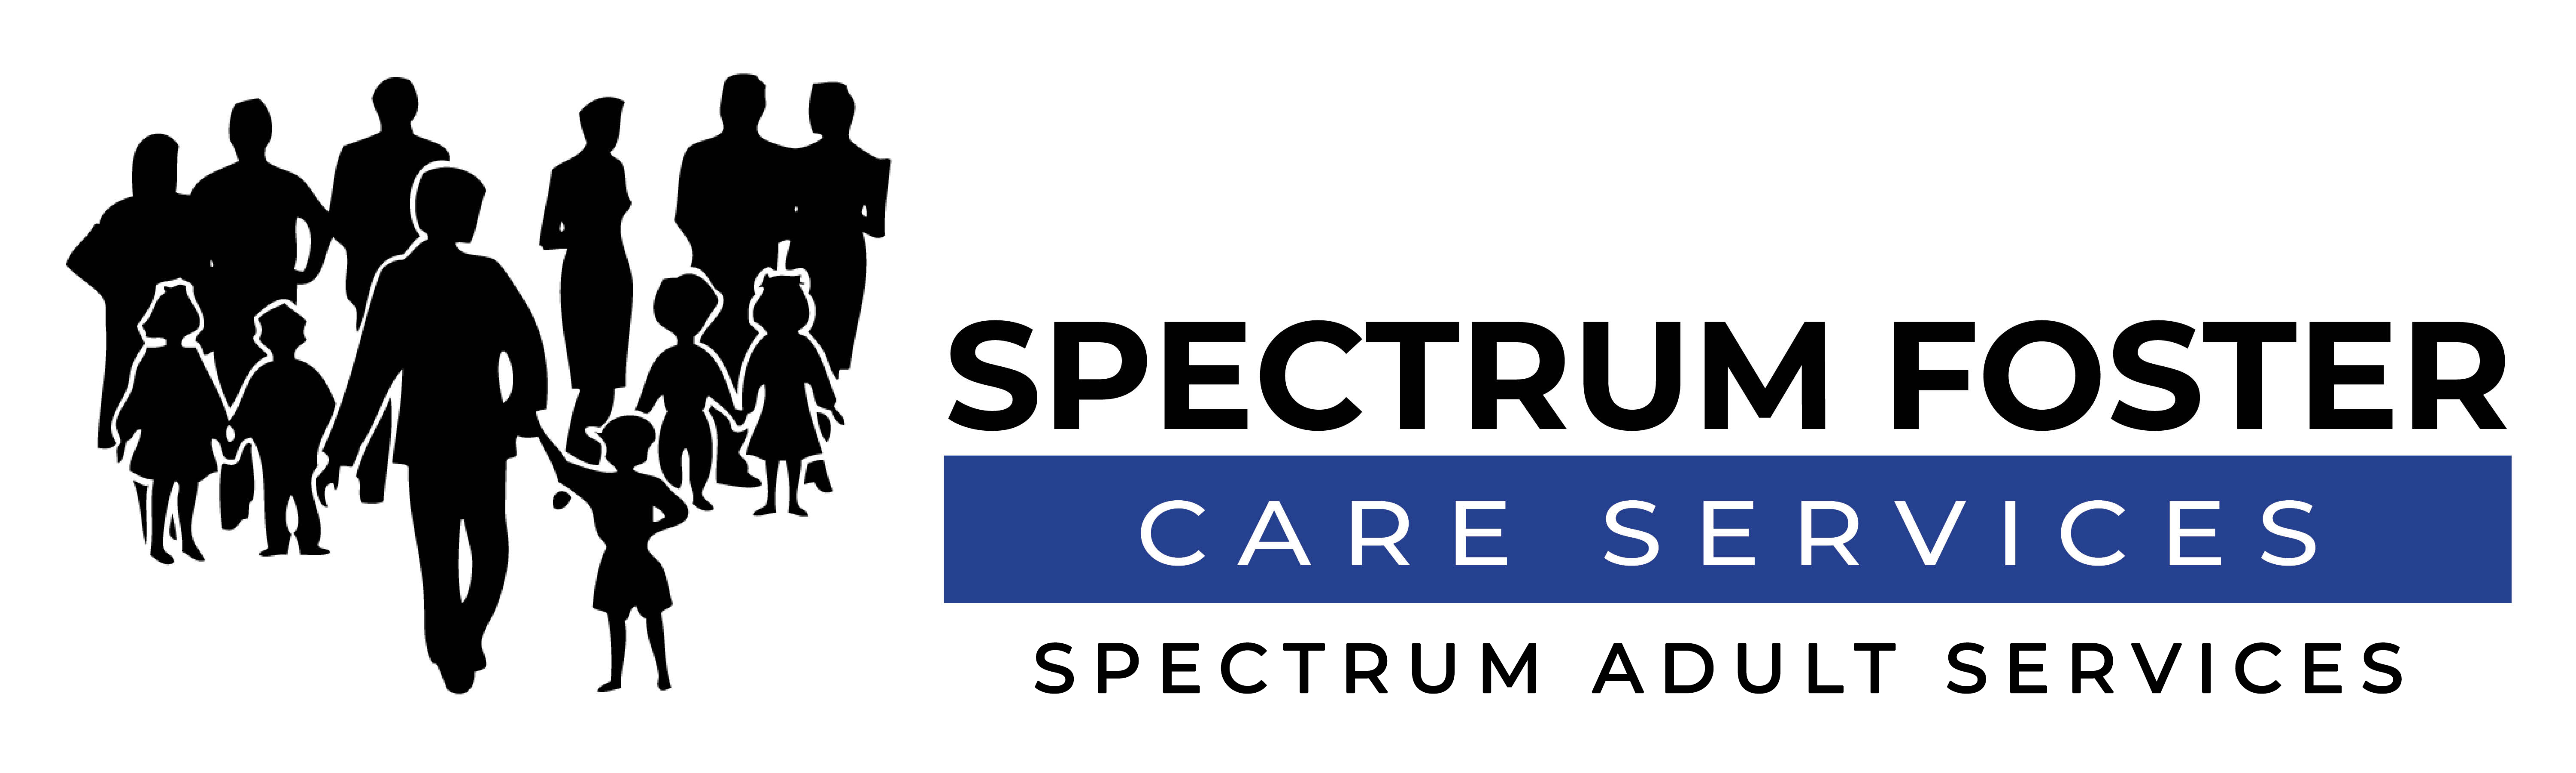 Spectrum Foster Care